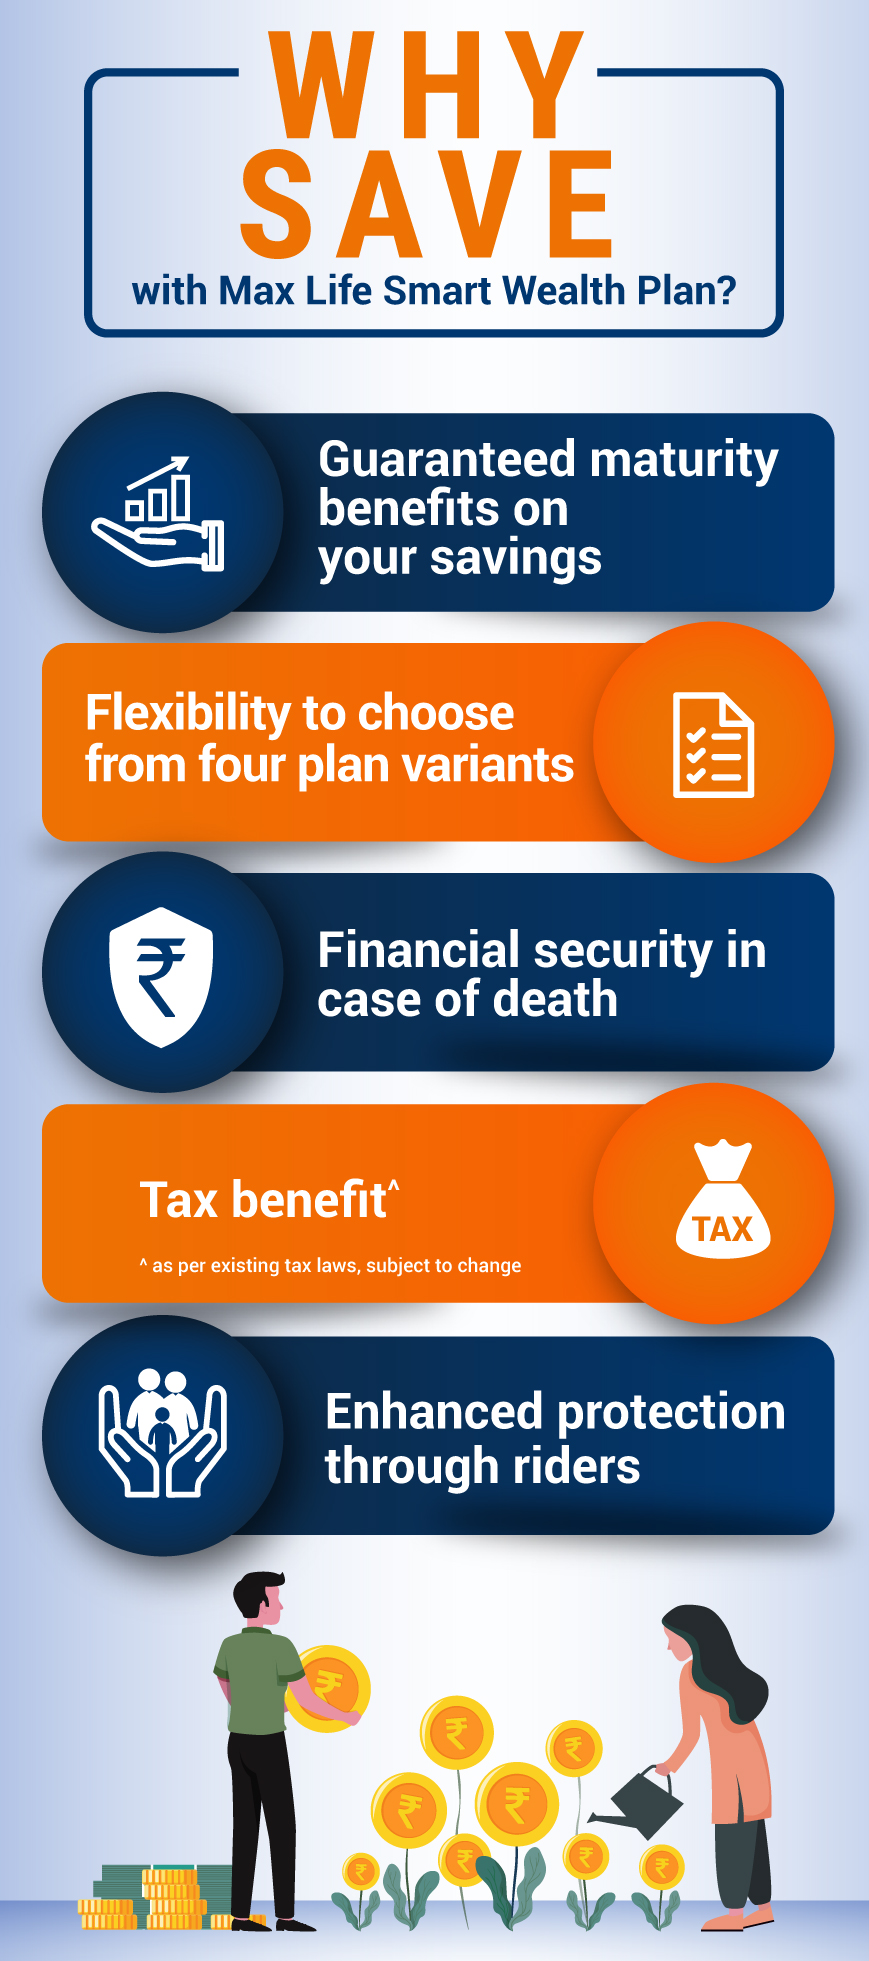 Life Insurance Tax Benefit